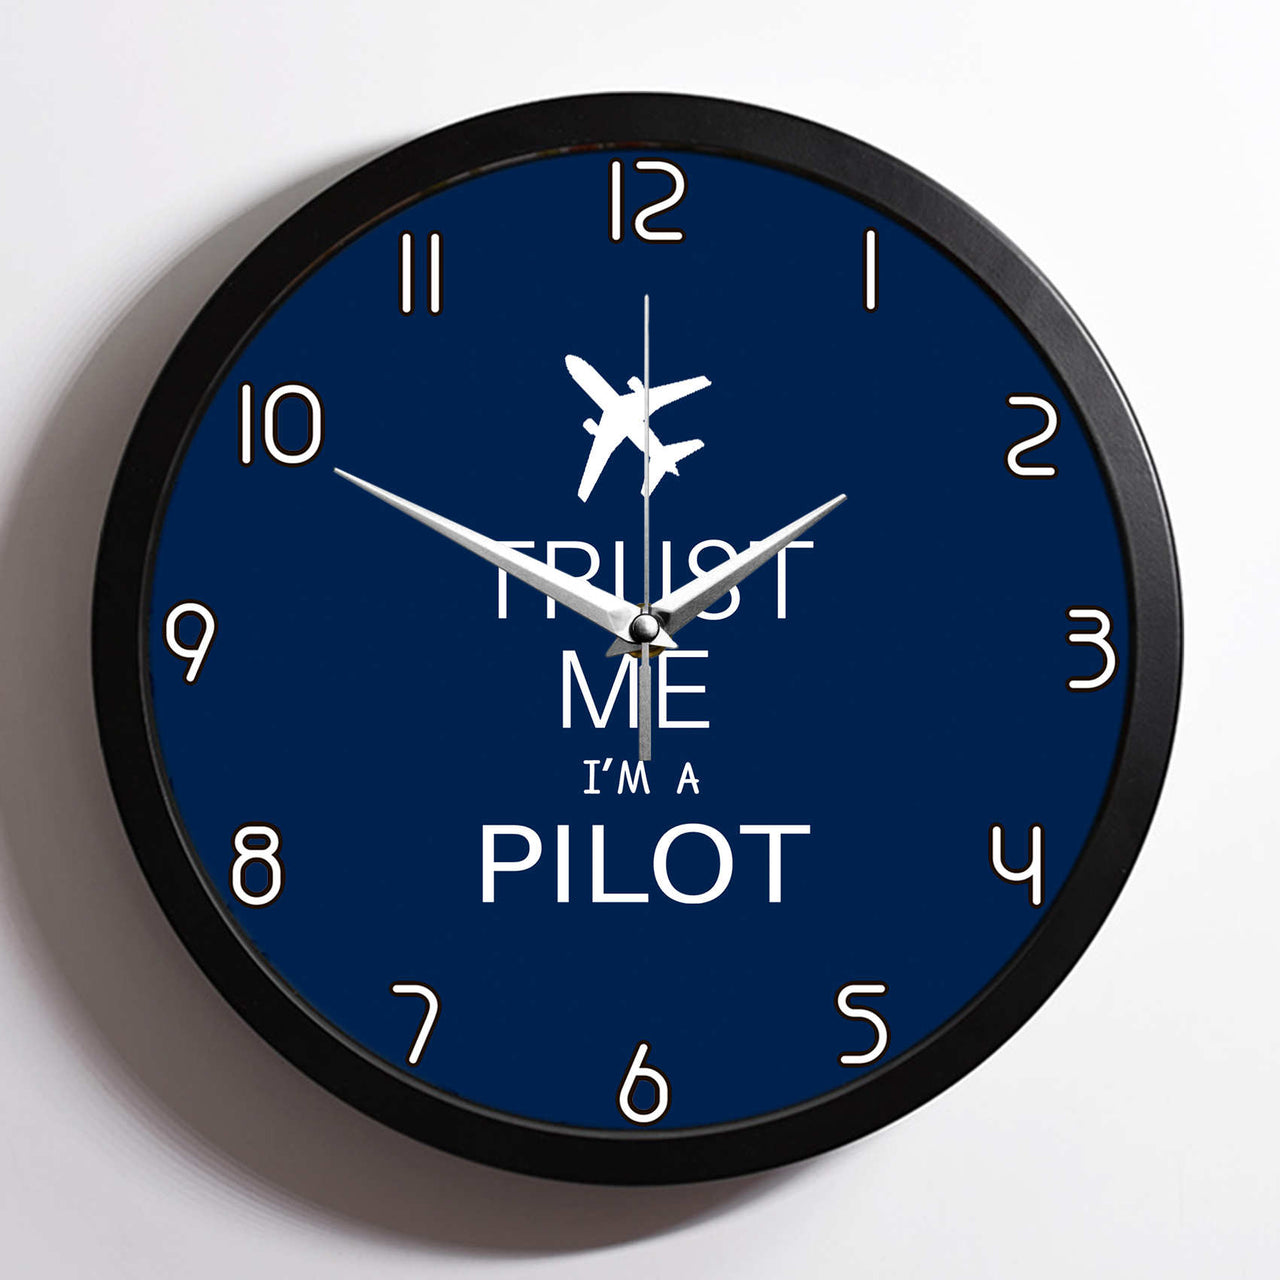 Trust Me I'm a Pilot 2 Designed Wall Clocks